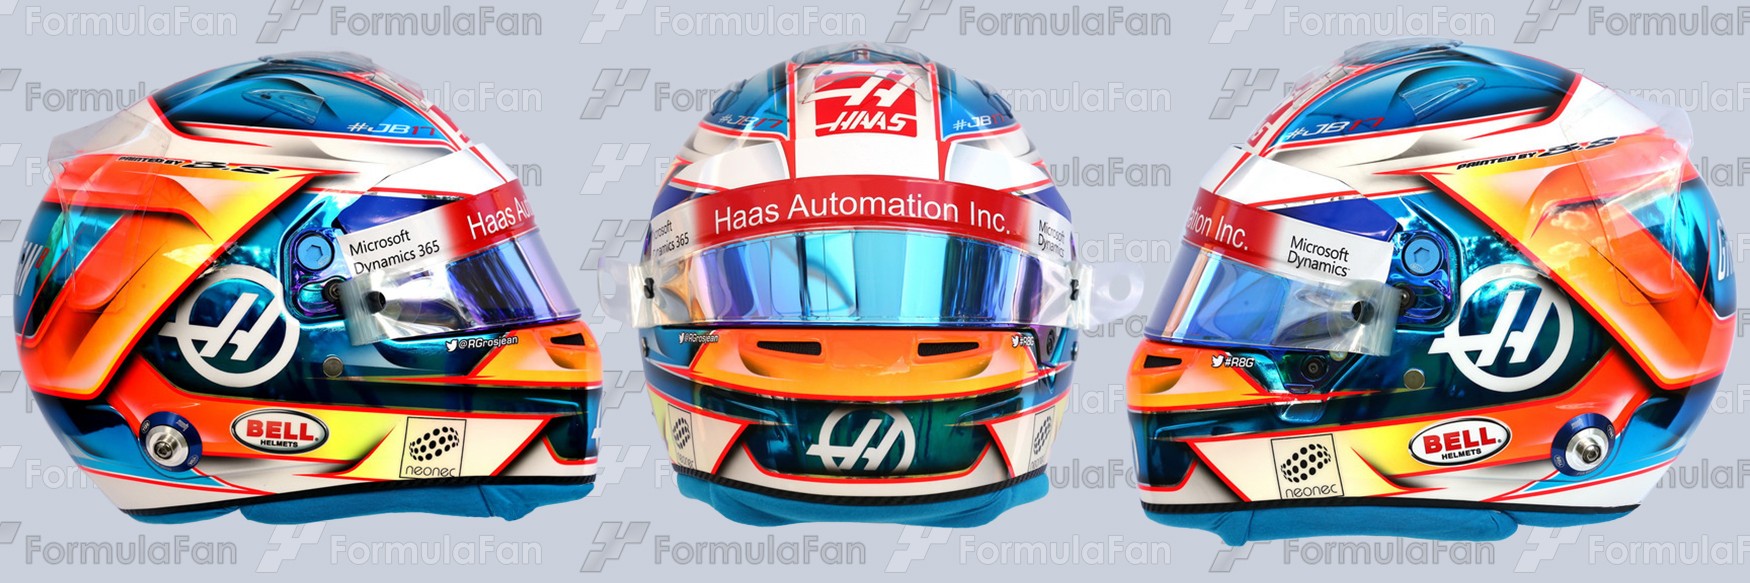 Шлем Романа Грожана на сезон 2017 года | 2017 helmet of Romain Grosjean